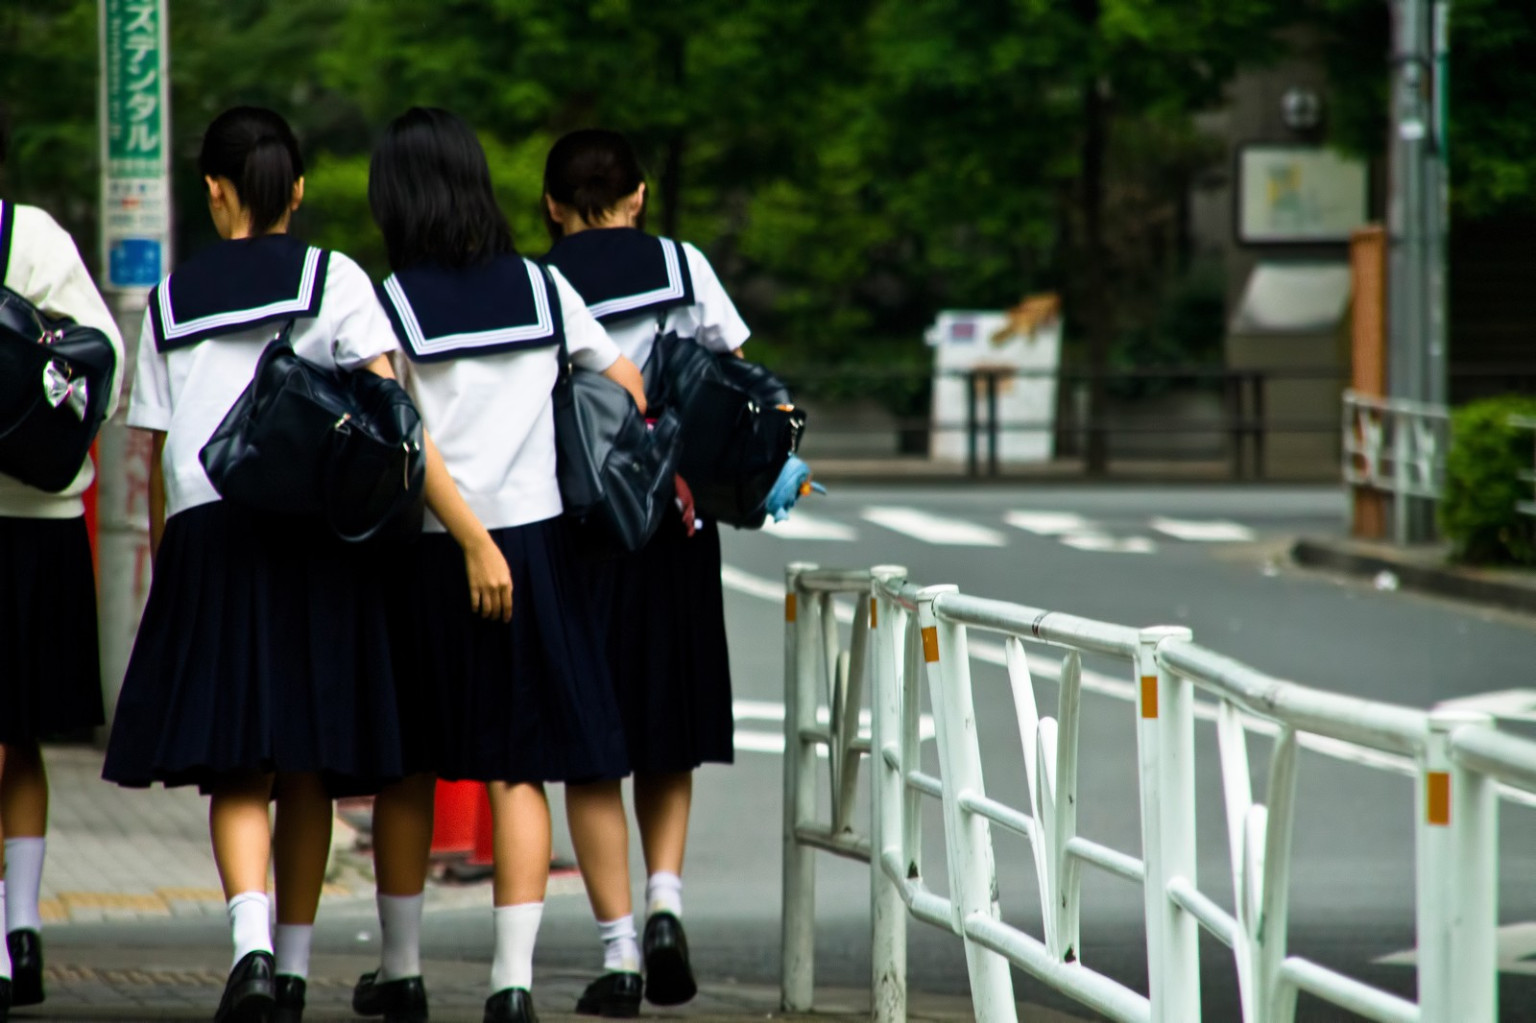 японские школьники фото